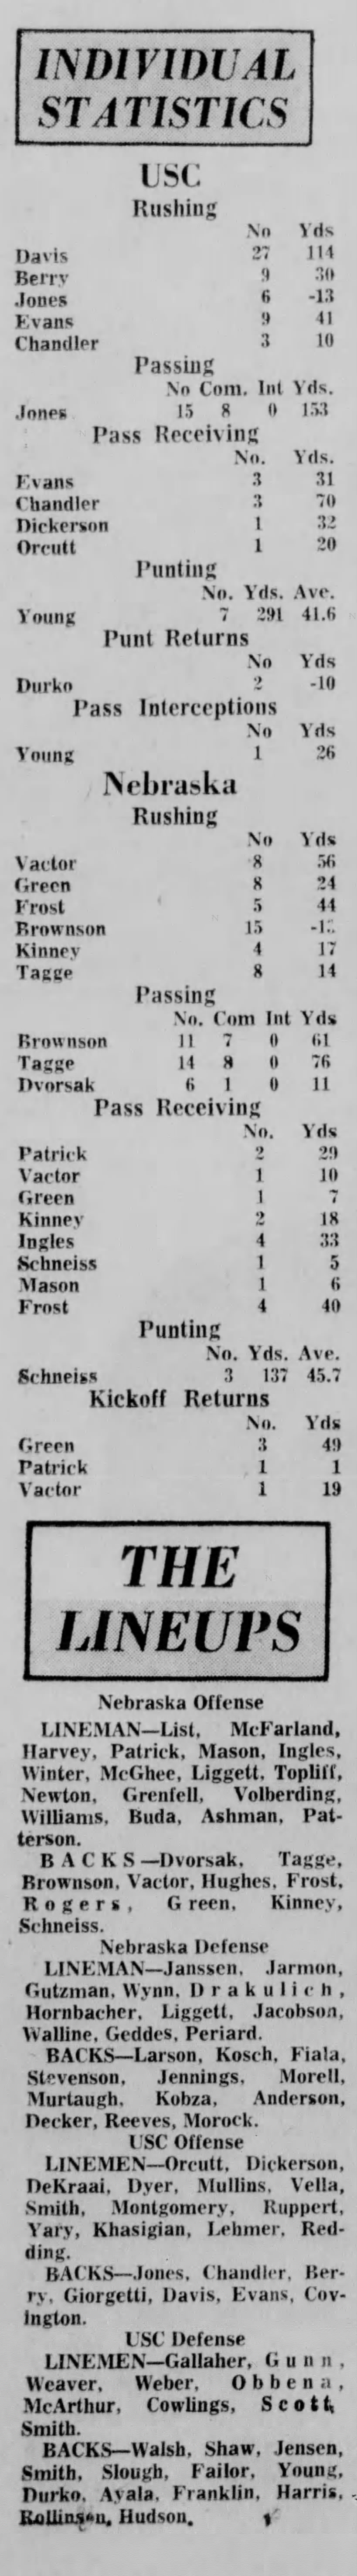 1969 Nebraska-Southern Cal football game stats